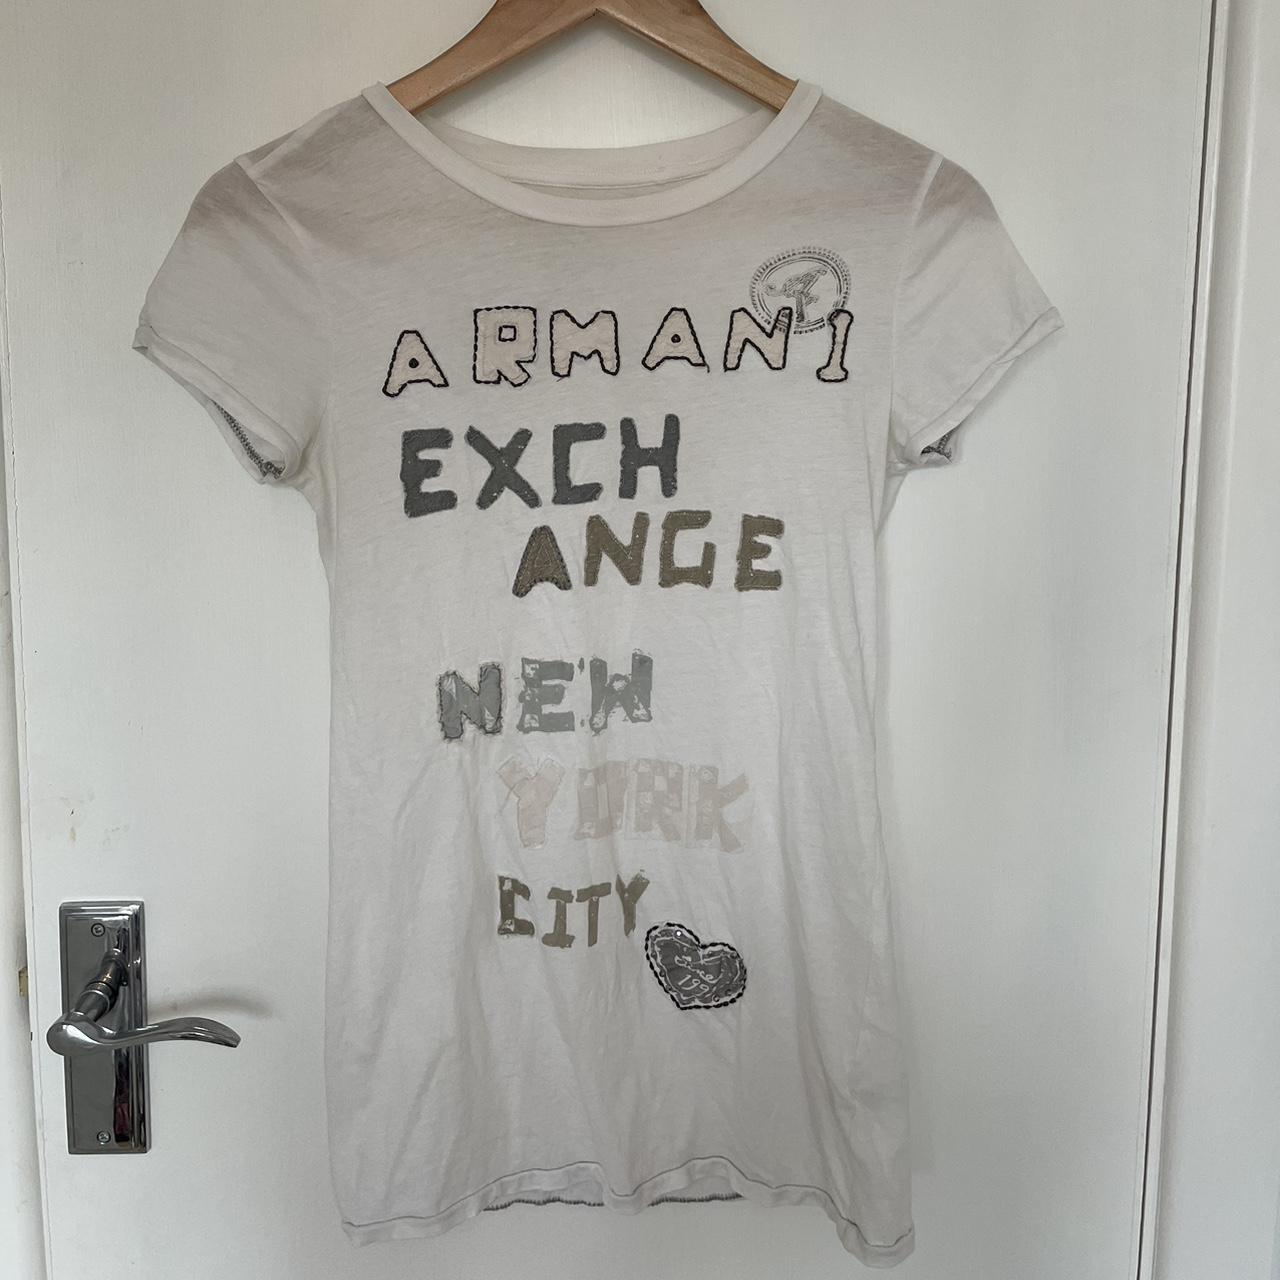 Armani Exchange city text logo t-shirt in black